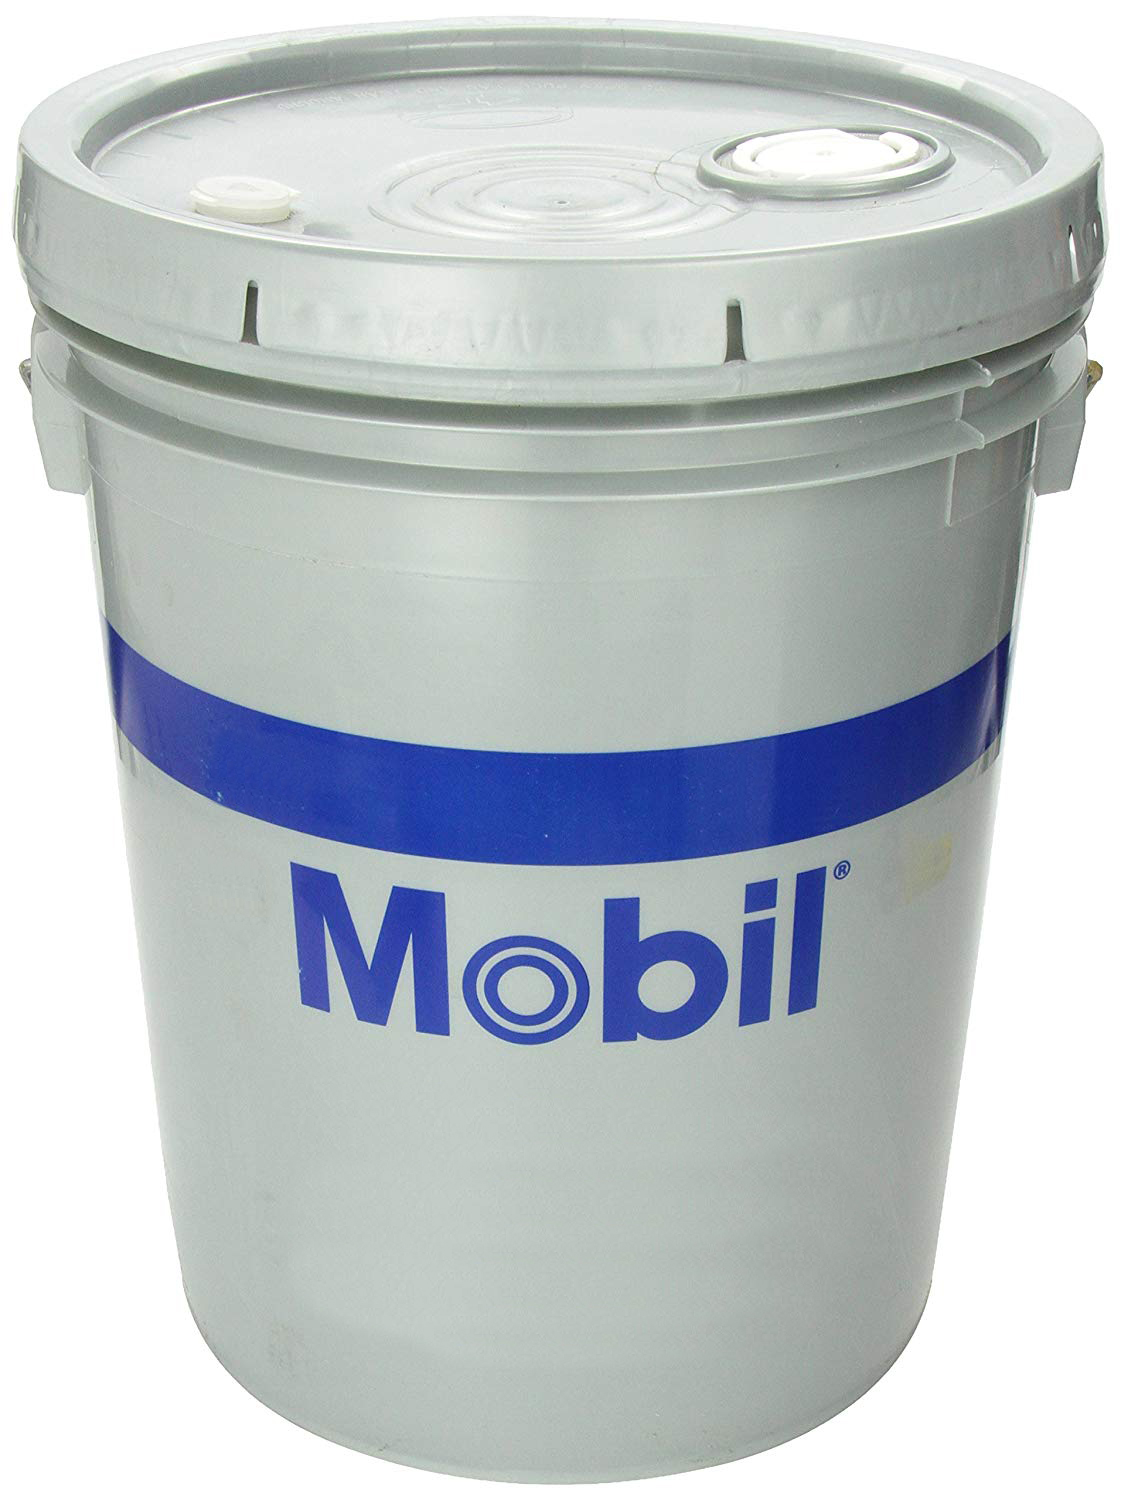 MOBIL SHC 629 (ISO-150) - 5 Gallon Pail